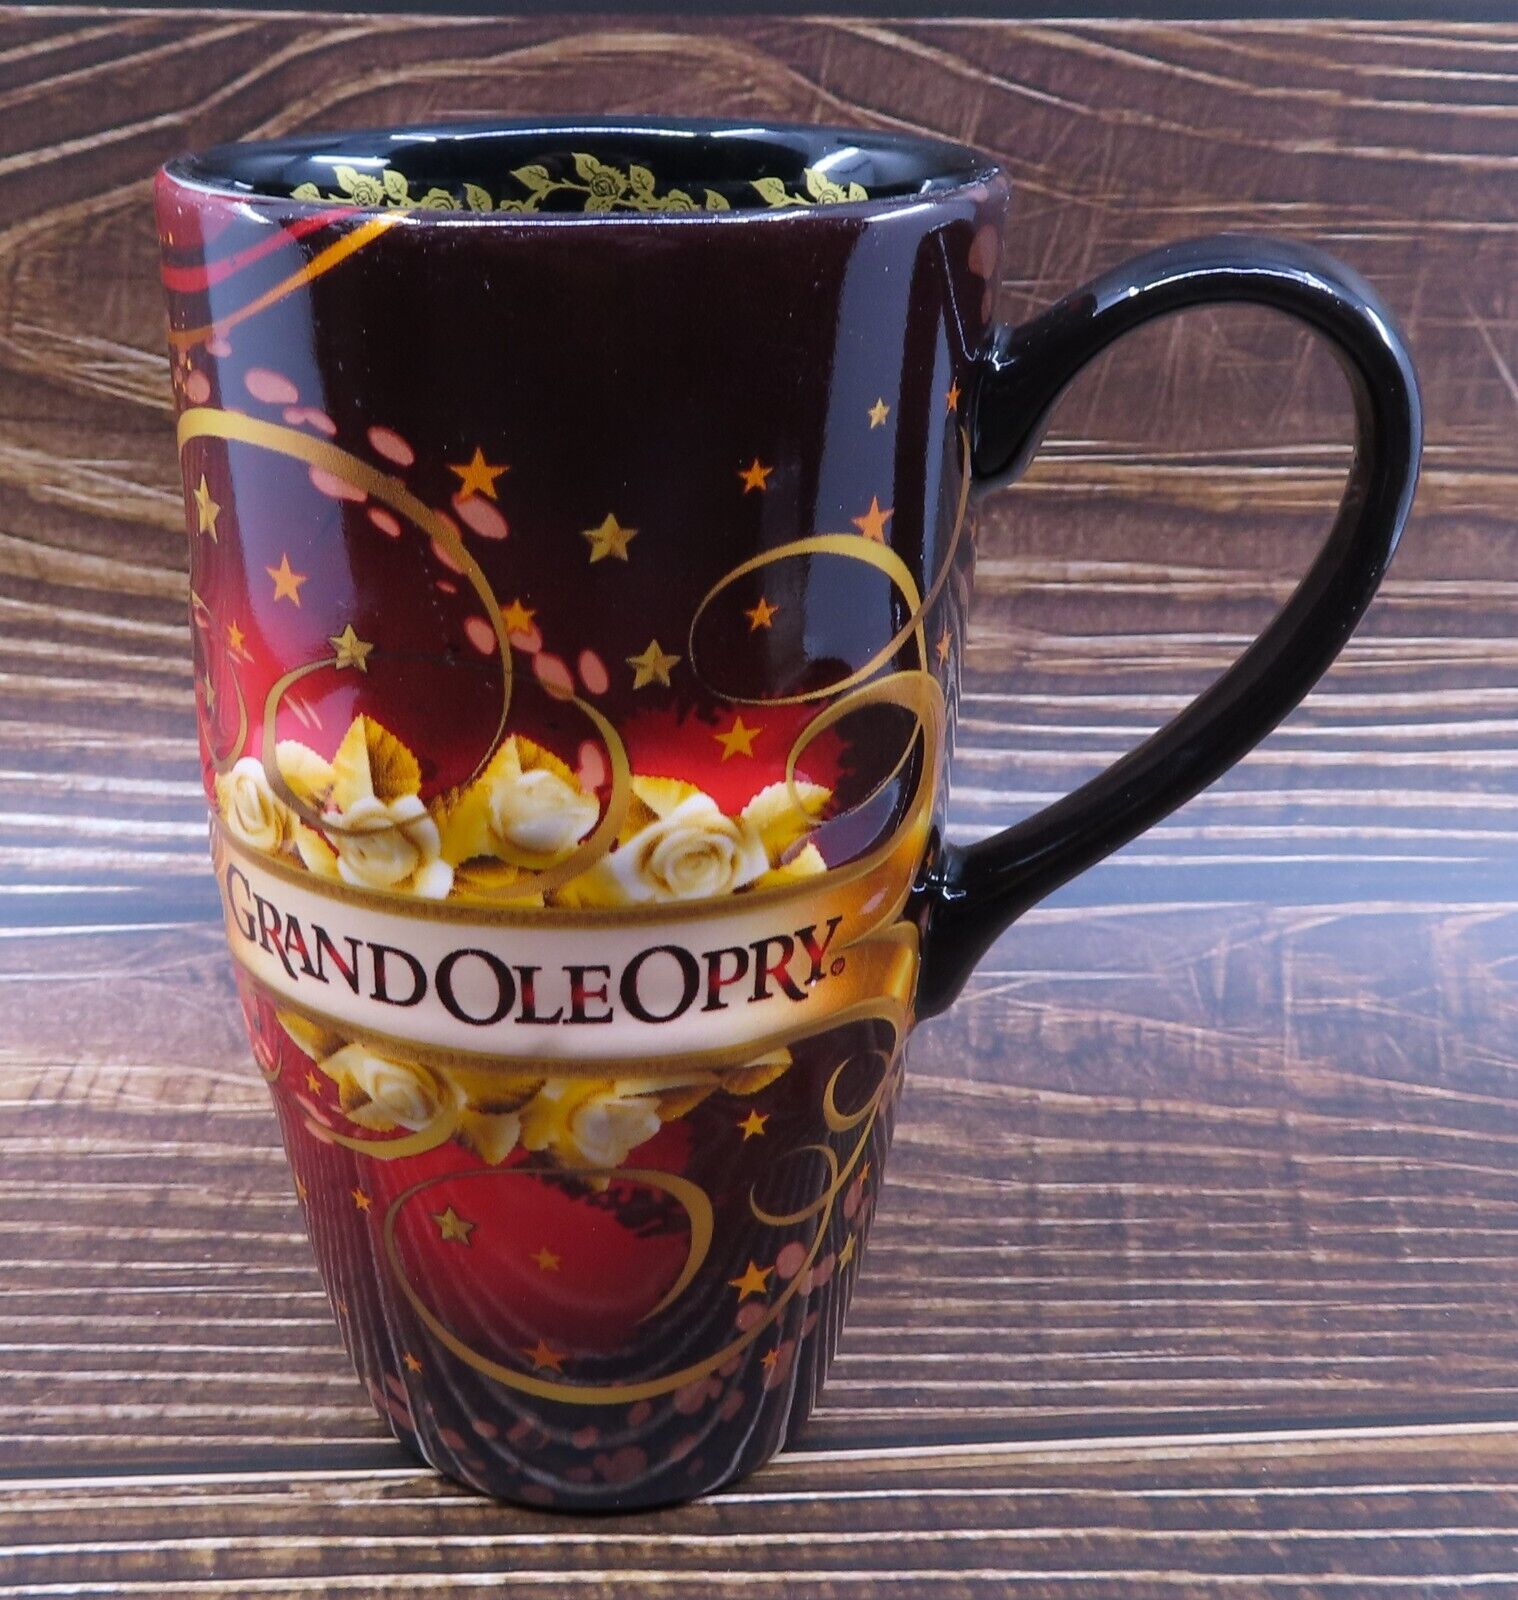 Grand Ole Opry Tall Coffee Mug Ceramic 3D Roses Stars Ribbons Microphone